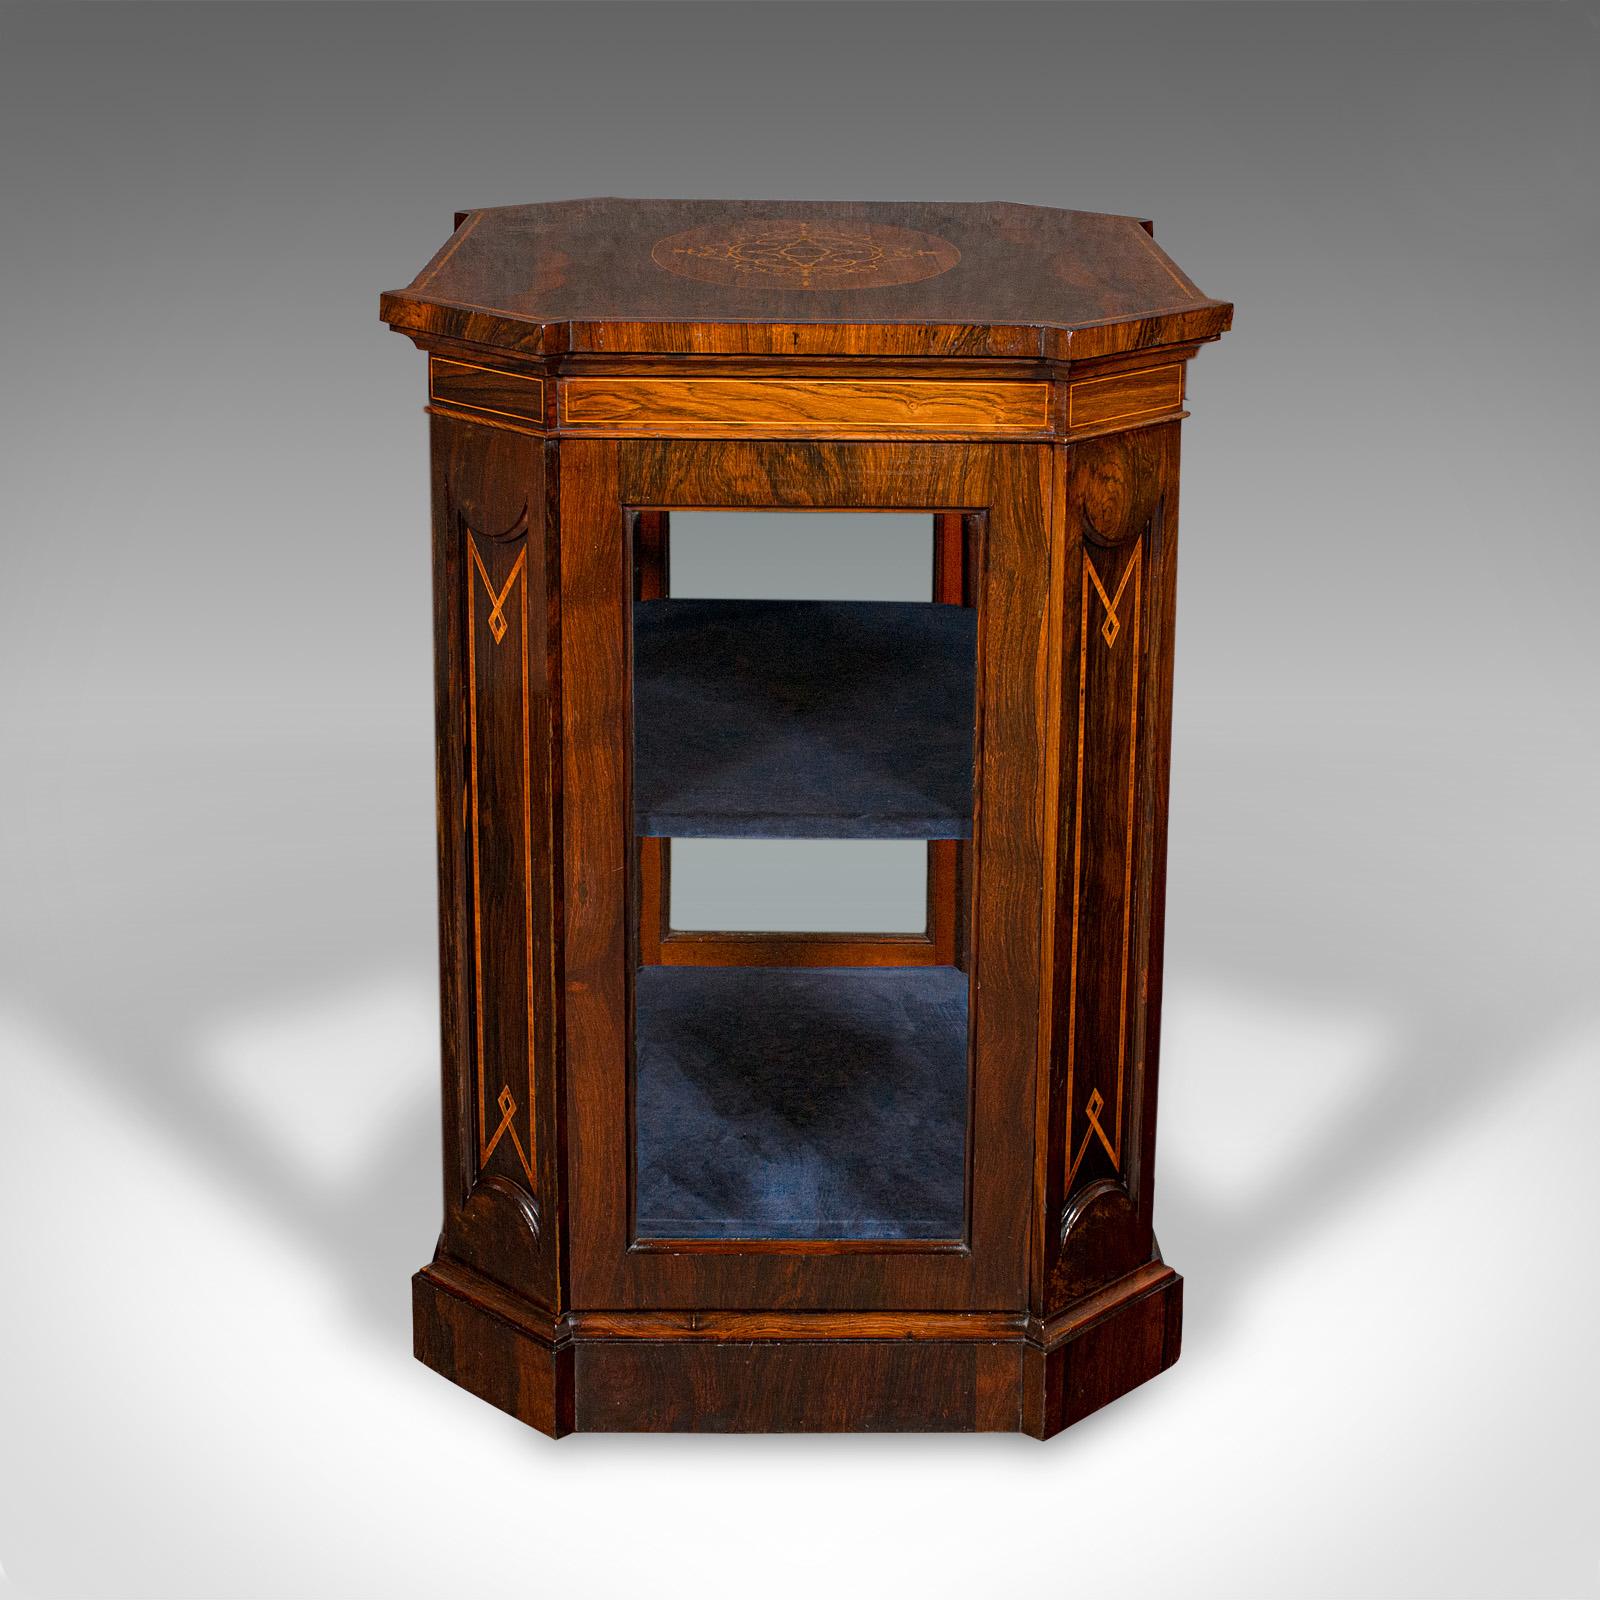 British Antique Jeweller's Display Cabinet, English, Glazed Shop Retail Case, Regency For Sale